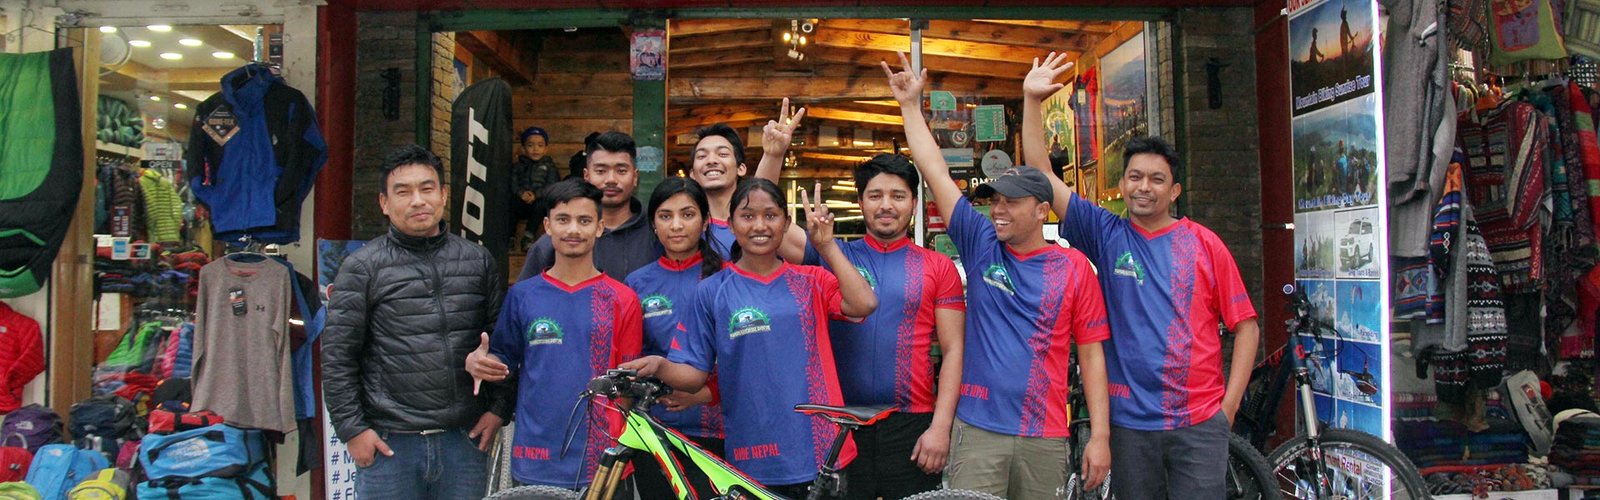 Pokhara Mountain Bike Team.